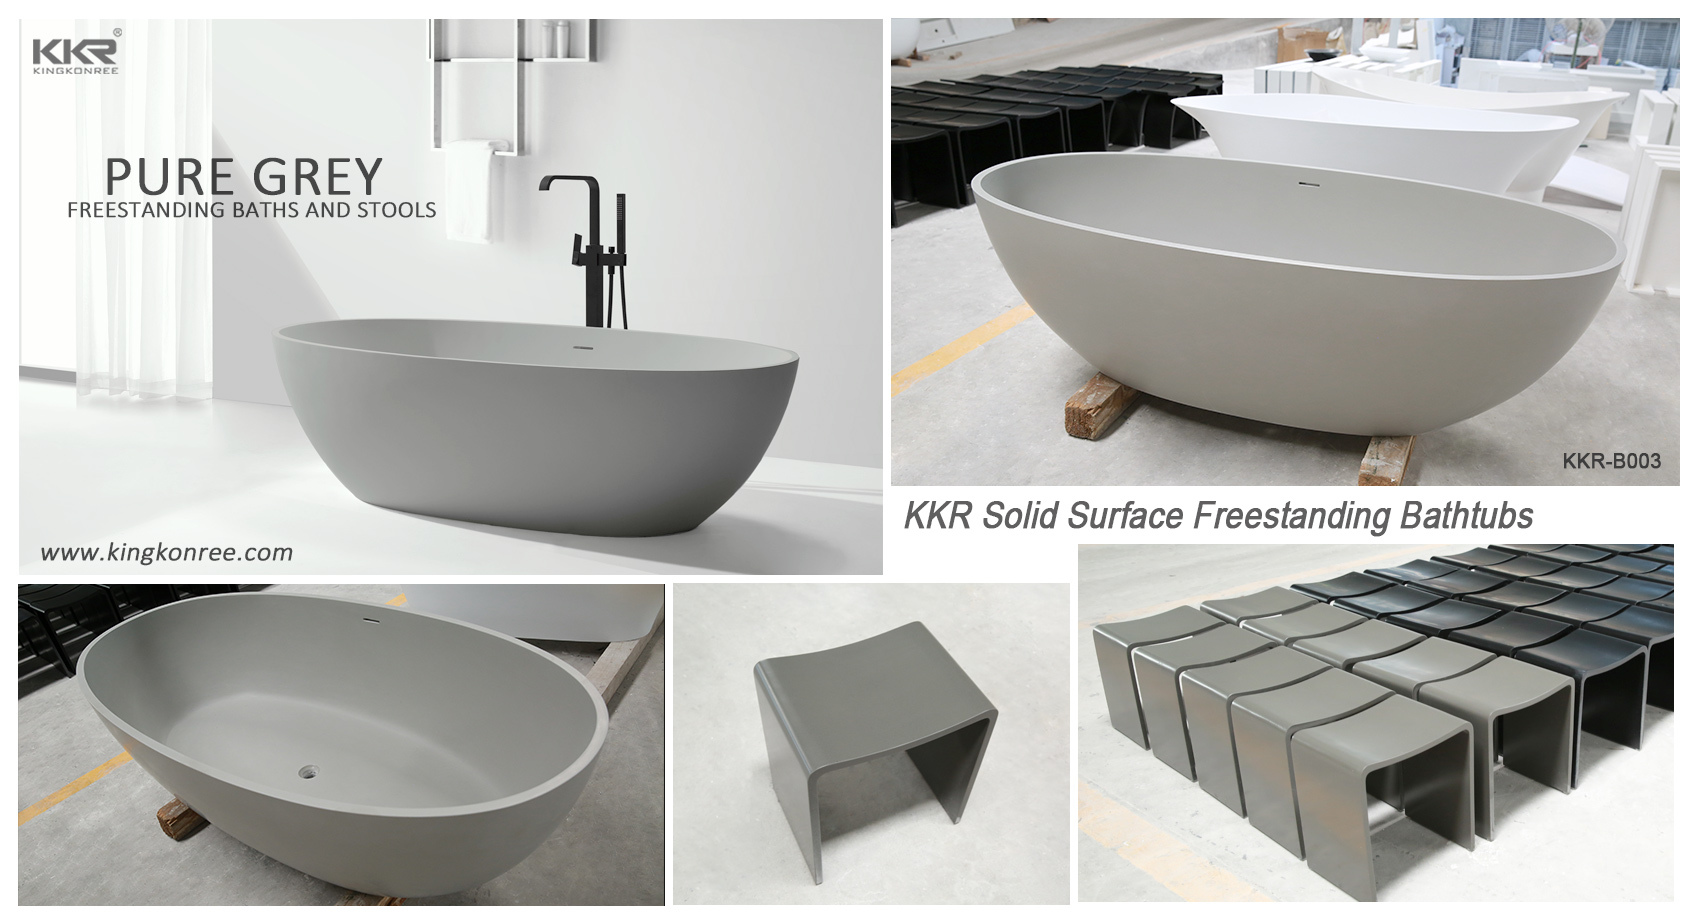 Wholesale over b006 solid surface bathtub KingKonree Brand